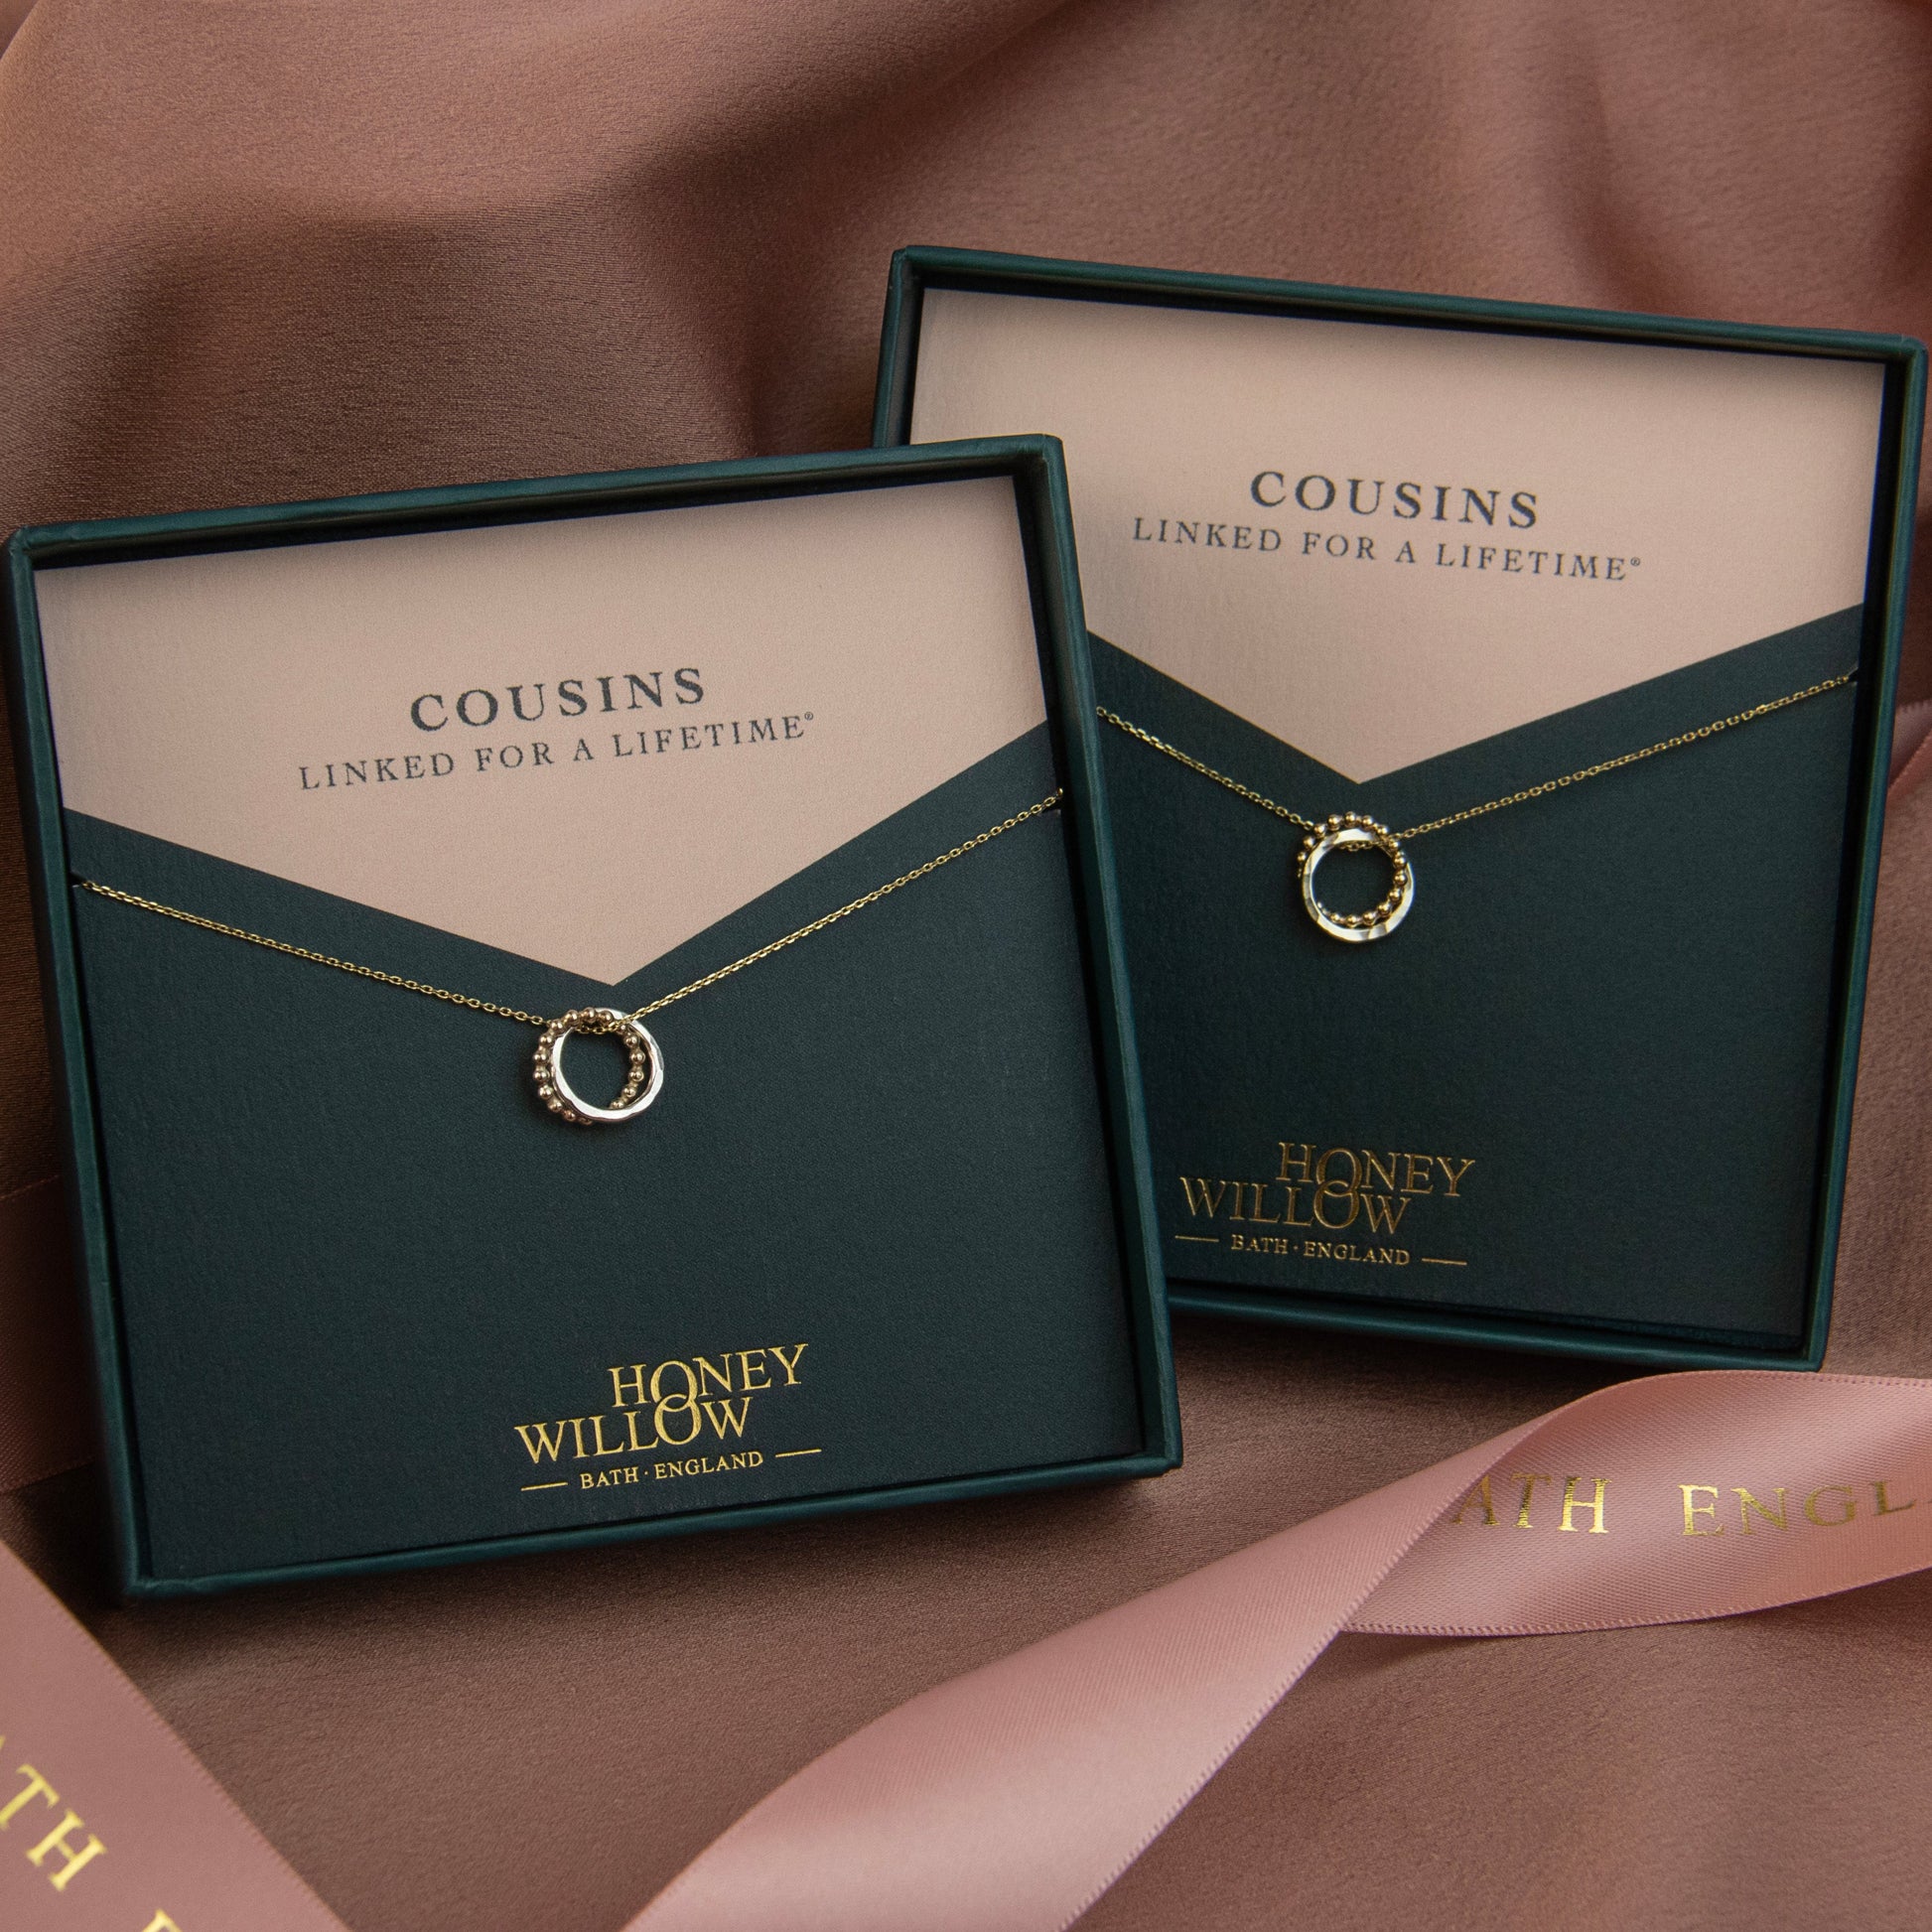 Cousins Necklaces Matching Set - 9kt Gold & Silver Love Knot Necklaces